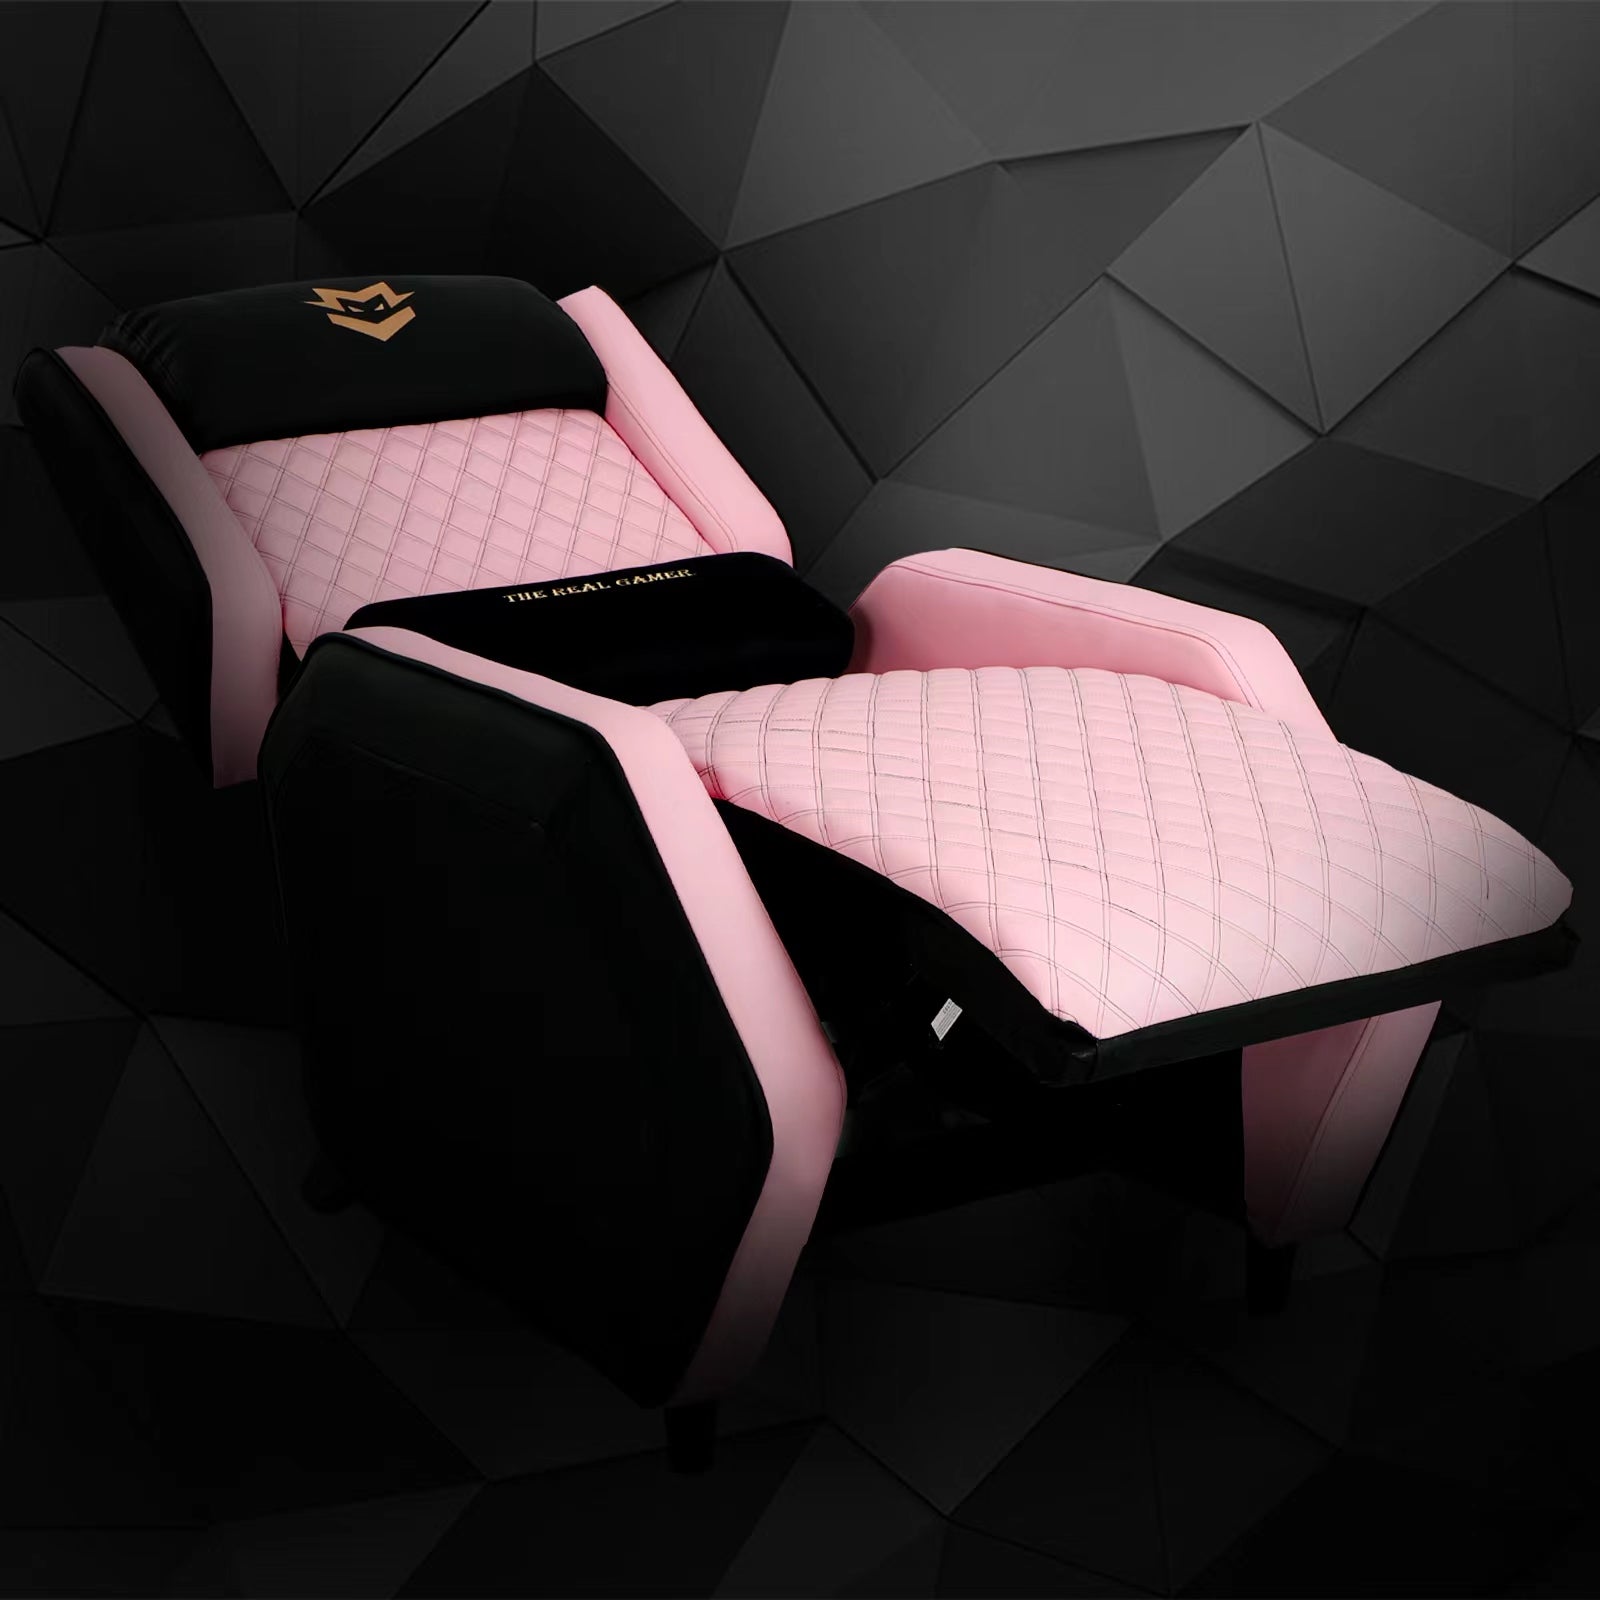 Wyatt Gaming Sofa Chair - Pink – The Real Gamer